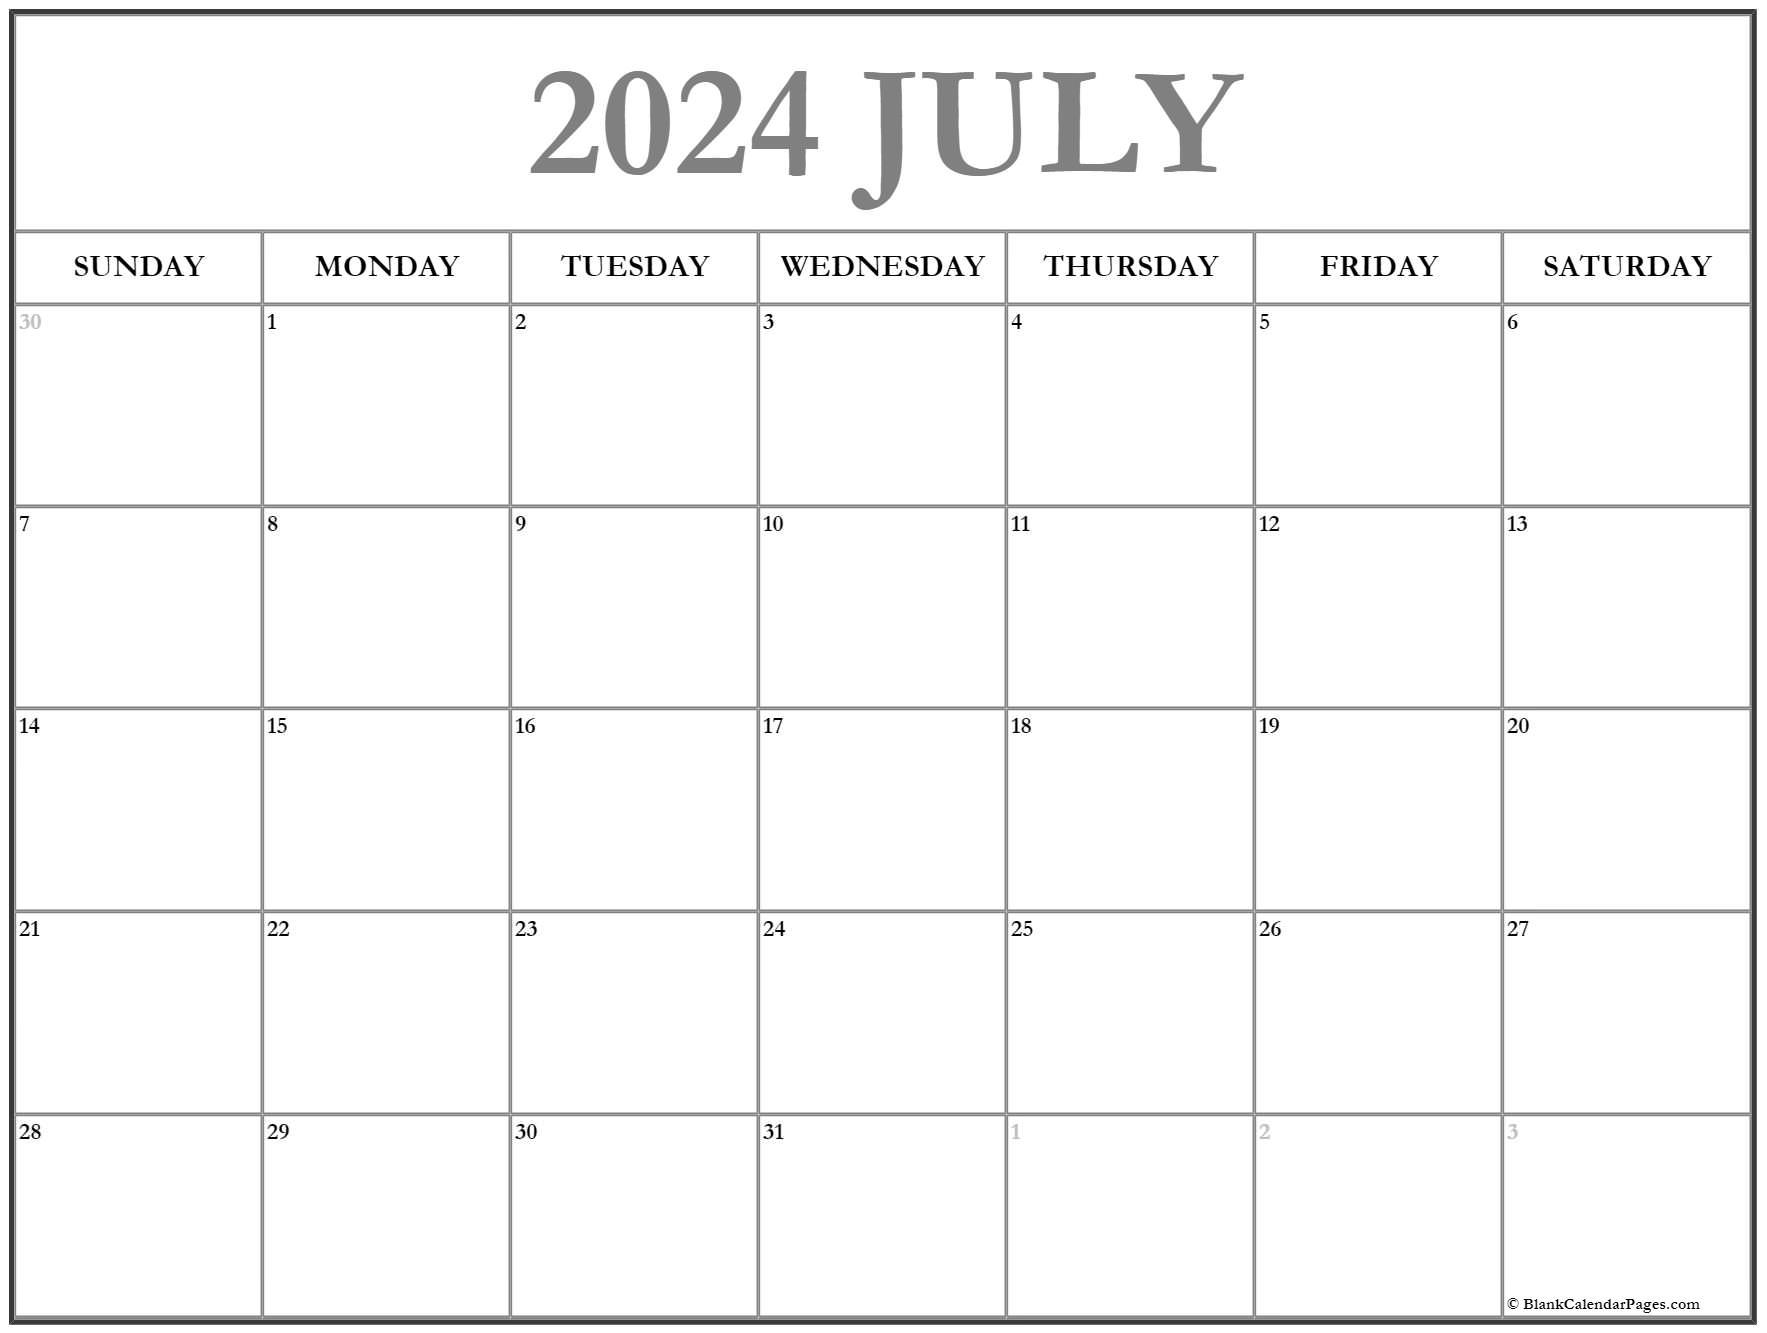 July 2024 calendar free printable calendar